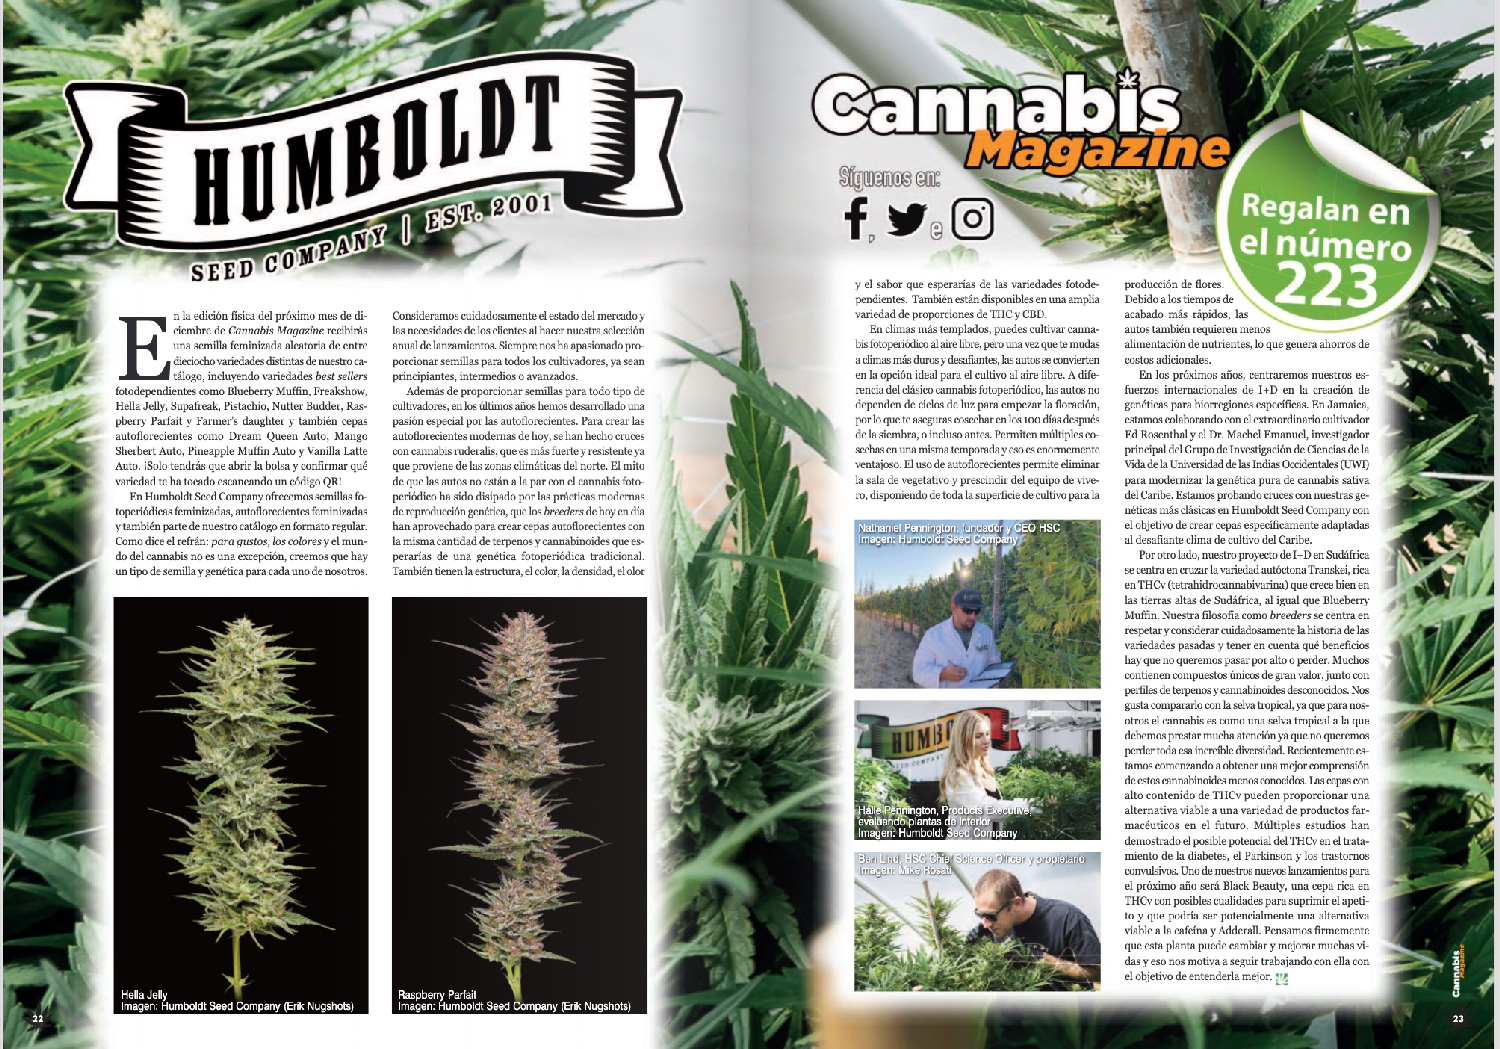 Cannabis magazine feature in Spain - Flower Photos